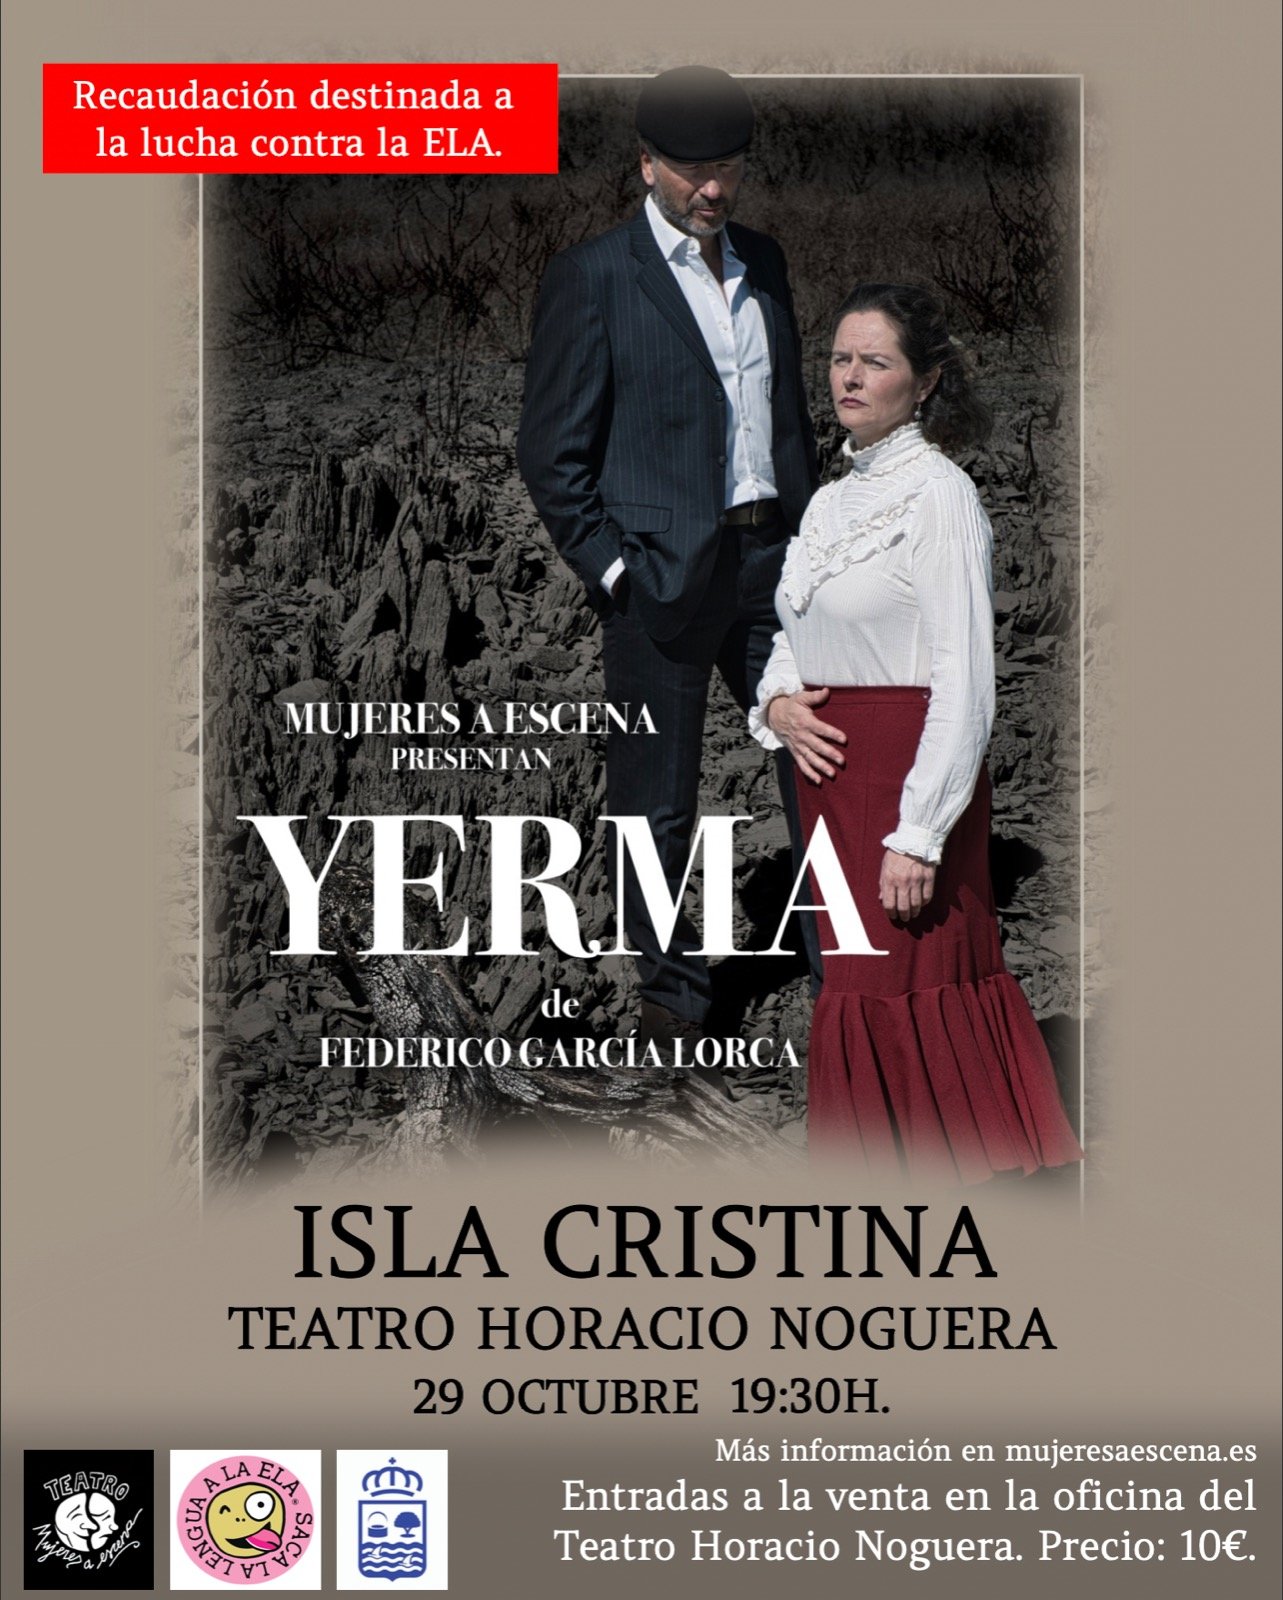 Mujeres a Escena, presentan en Isla Cristina: “YERMA” de Federico García Lorca